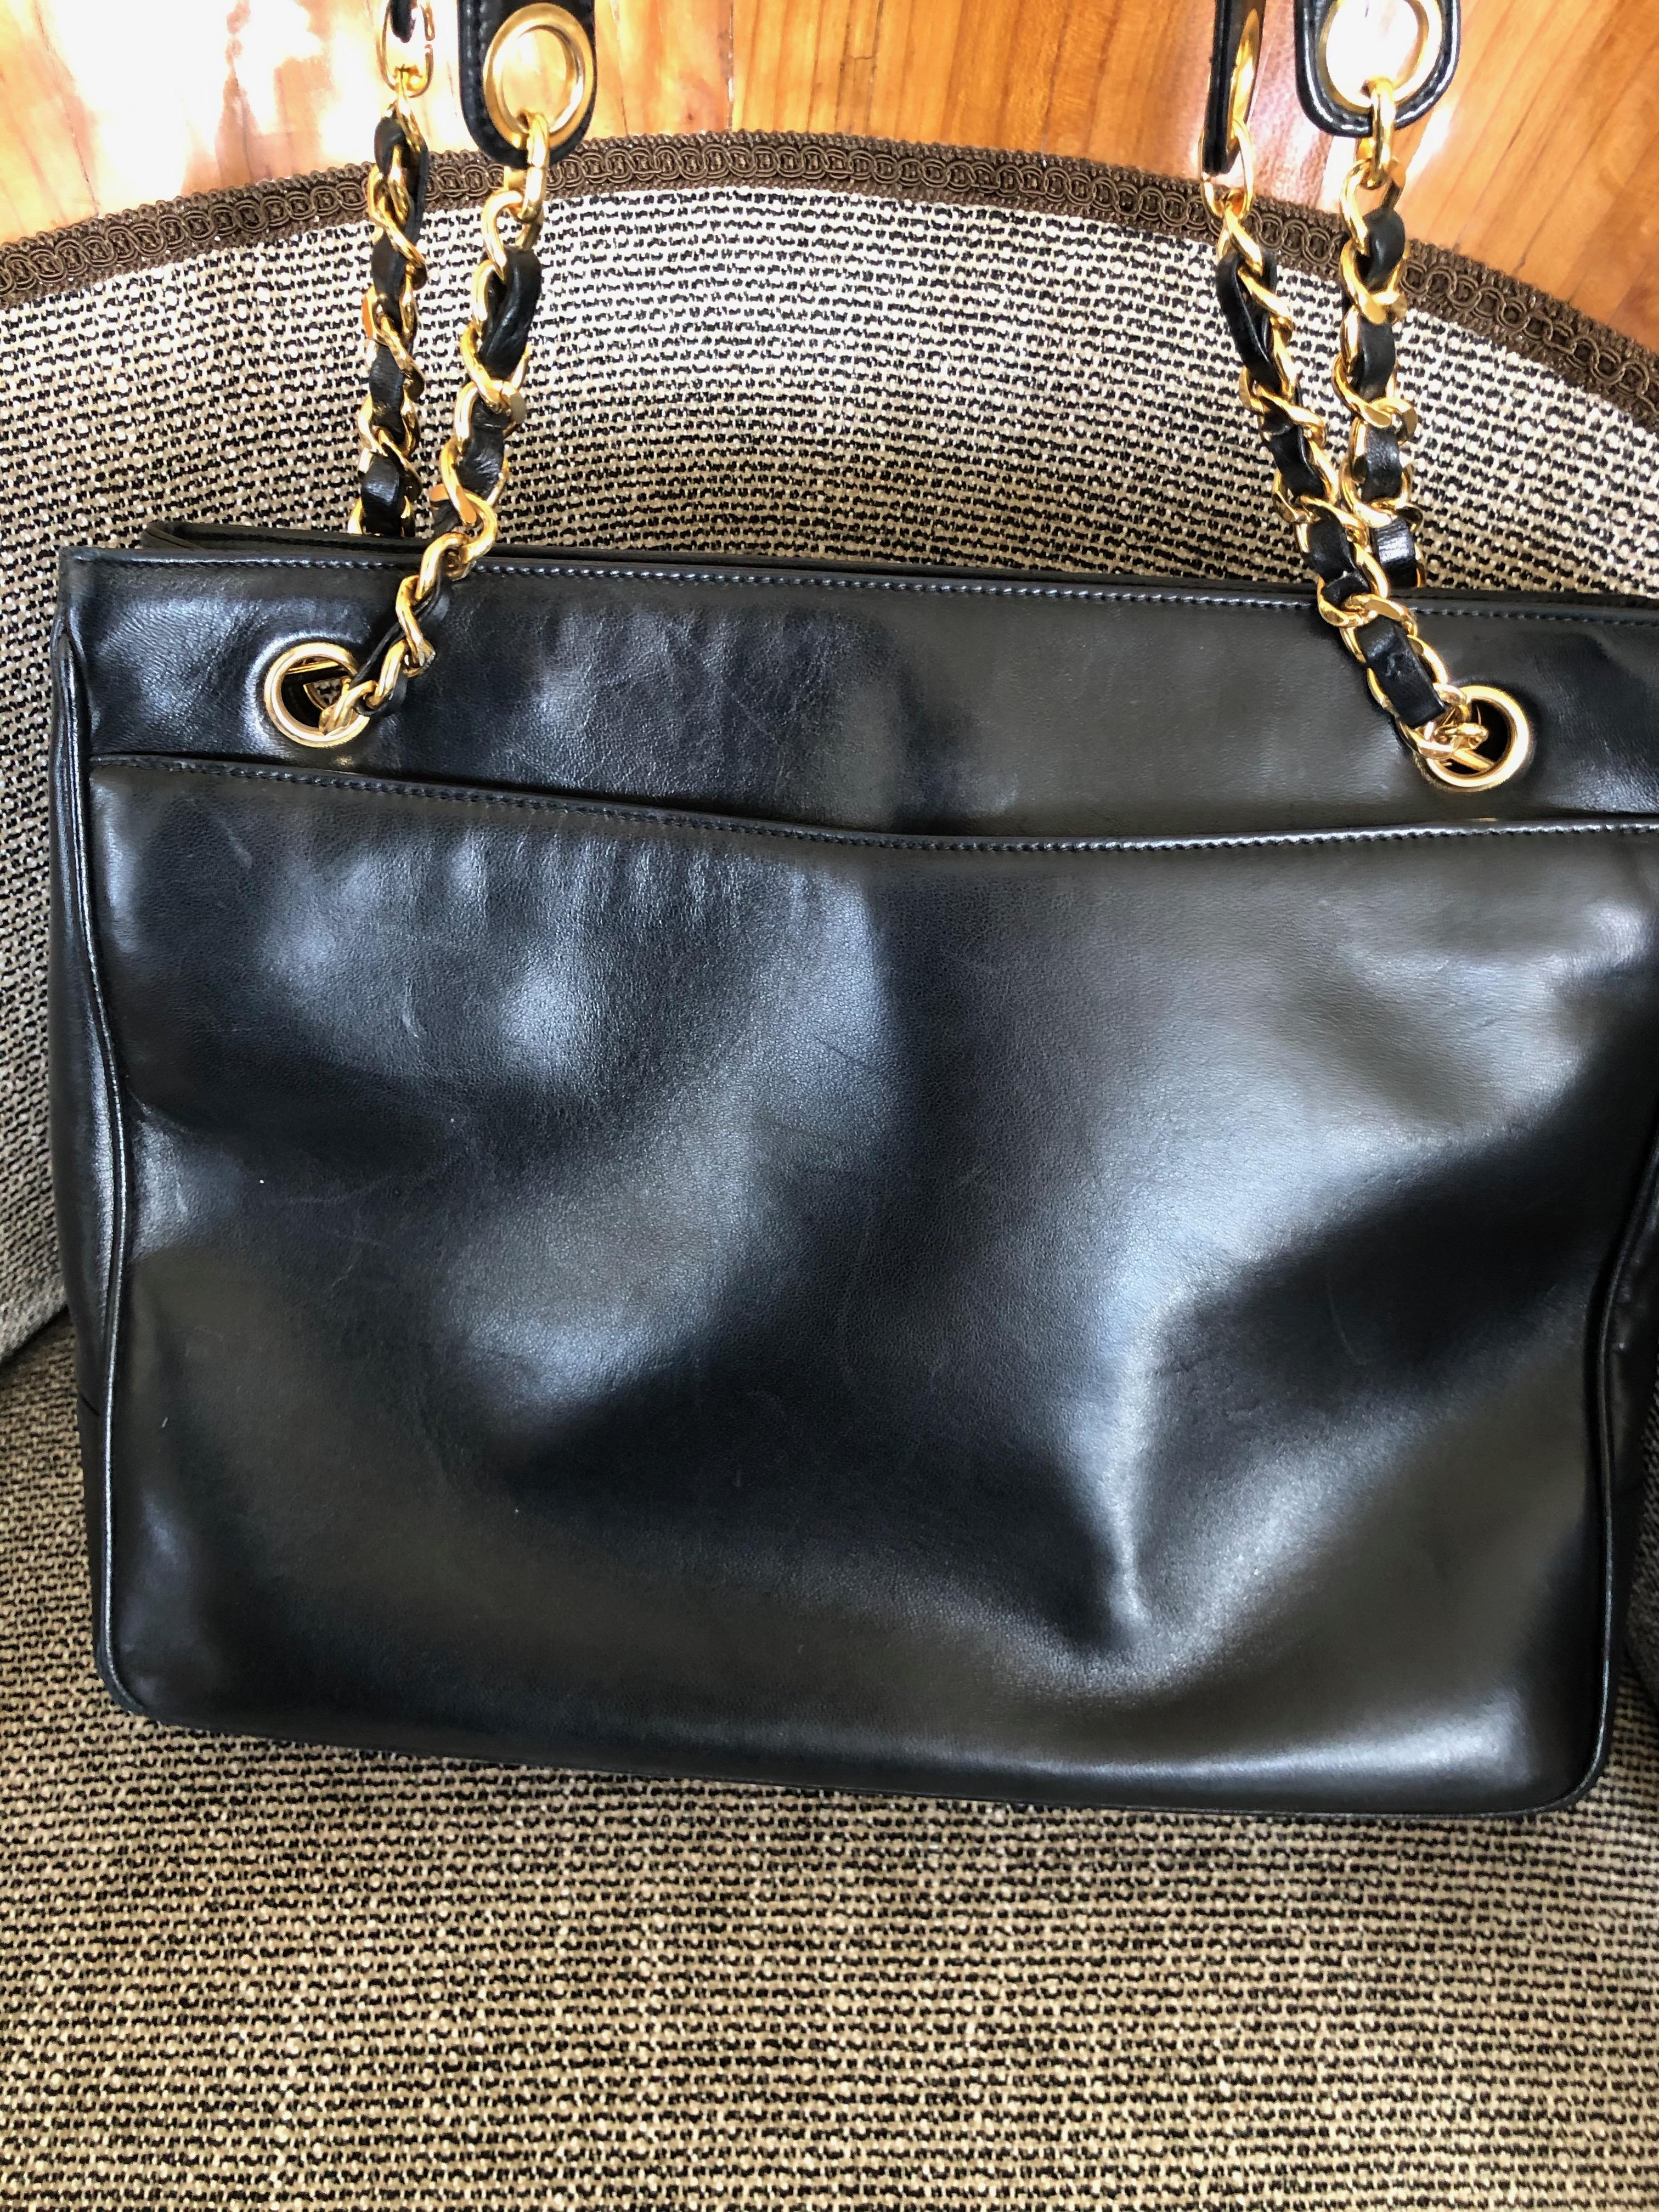 Chanel Large Vintage Black Leather Shopping Bag w Large CC Logo & Gold Hardware For Sale 2